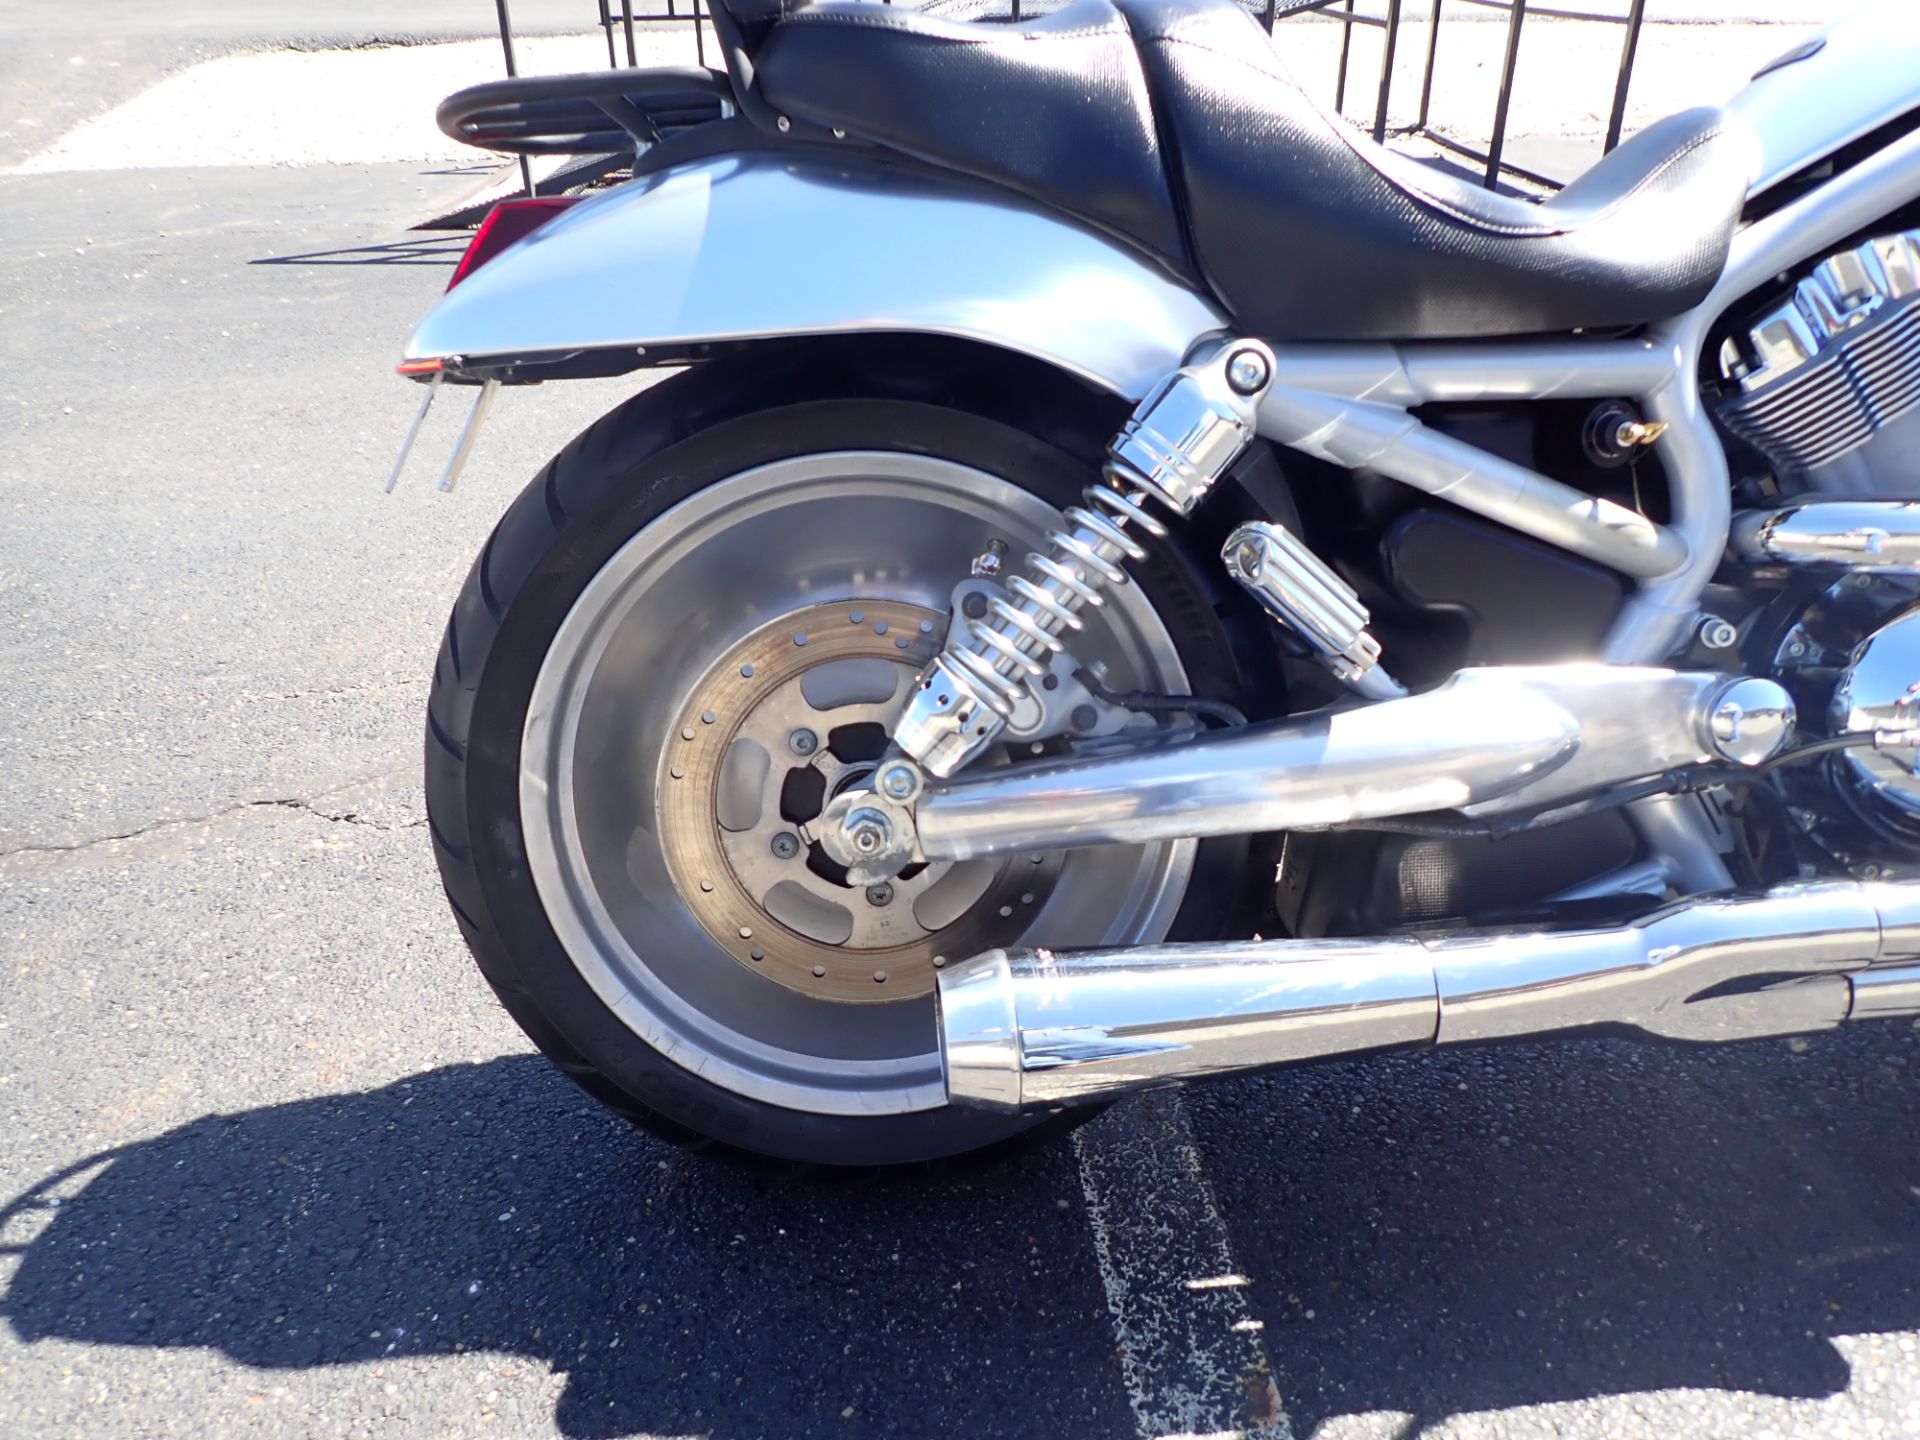 2003 Harley-Davidson VRSCA  V-Rod® in Massillon, Ohio - Photo 5